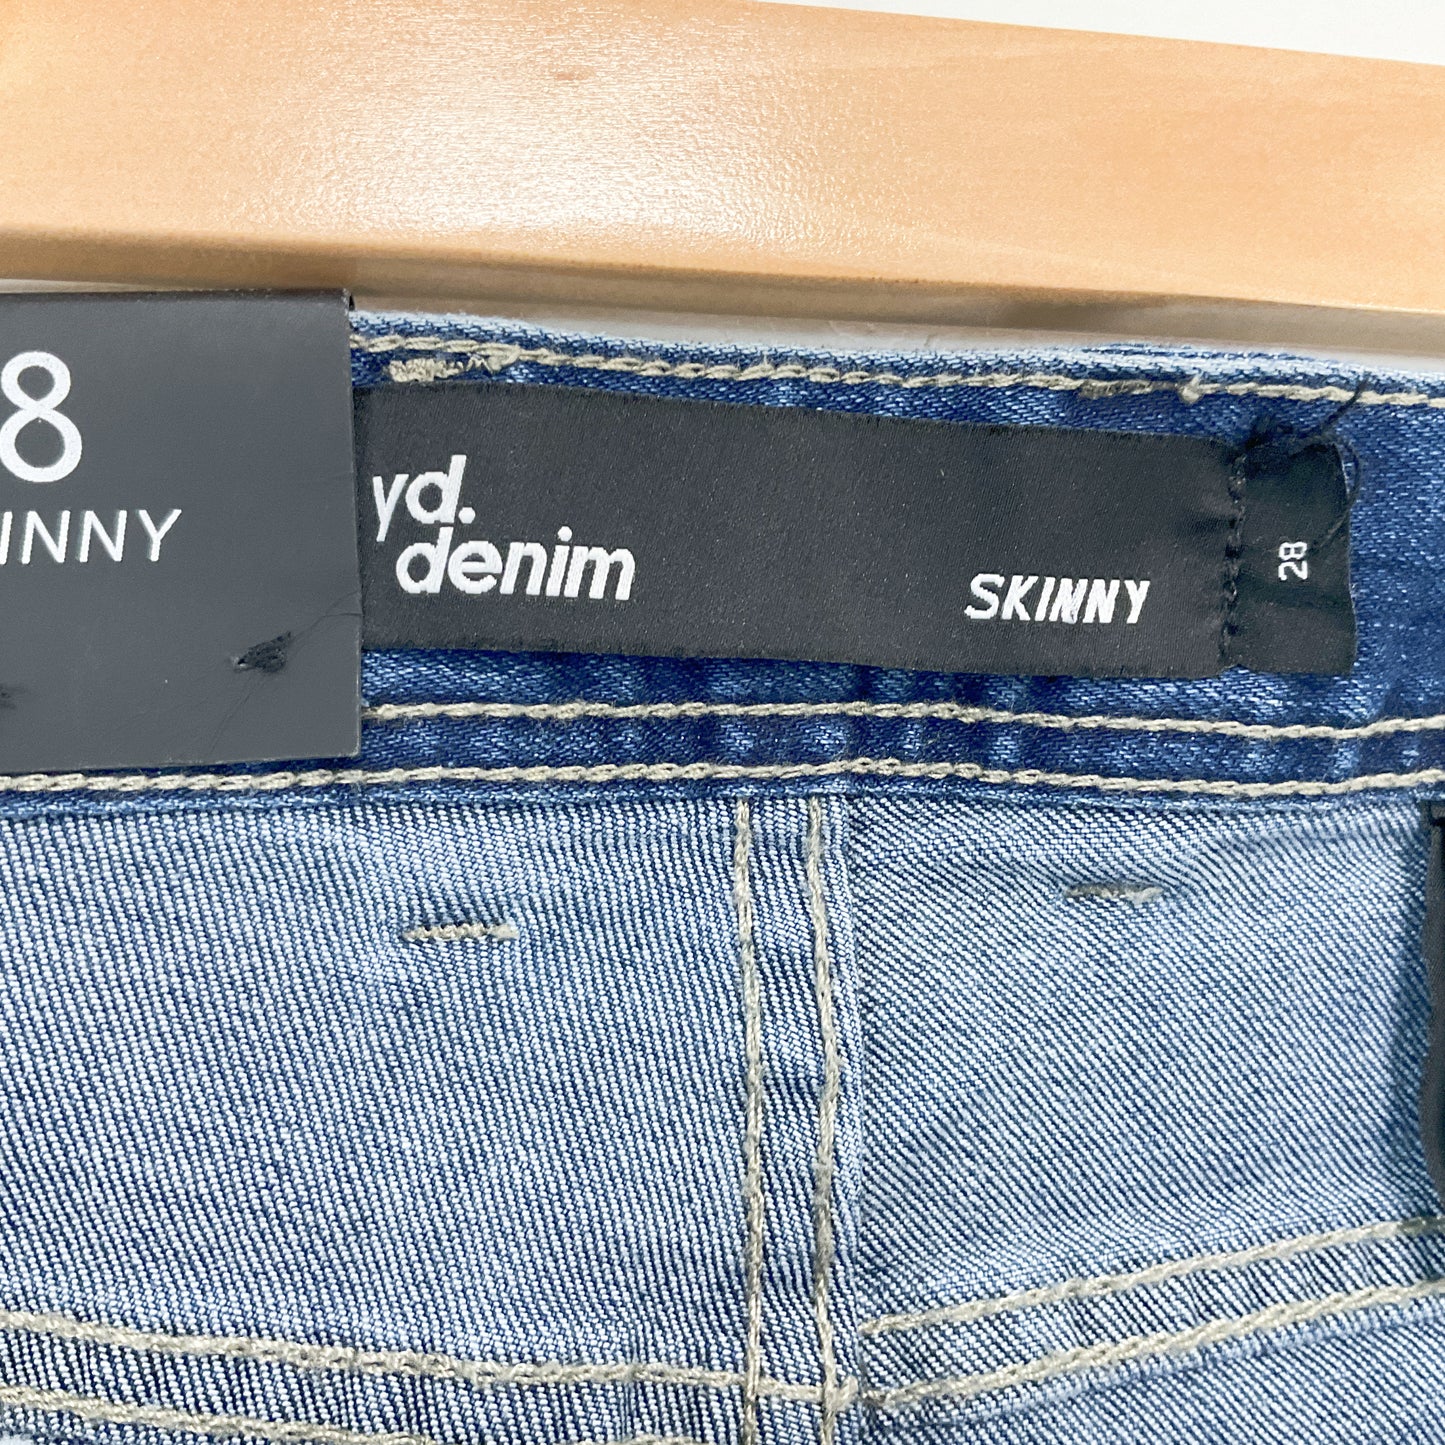 YD - Jett Skinny Jean